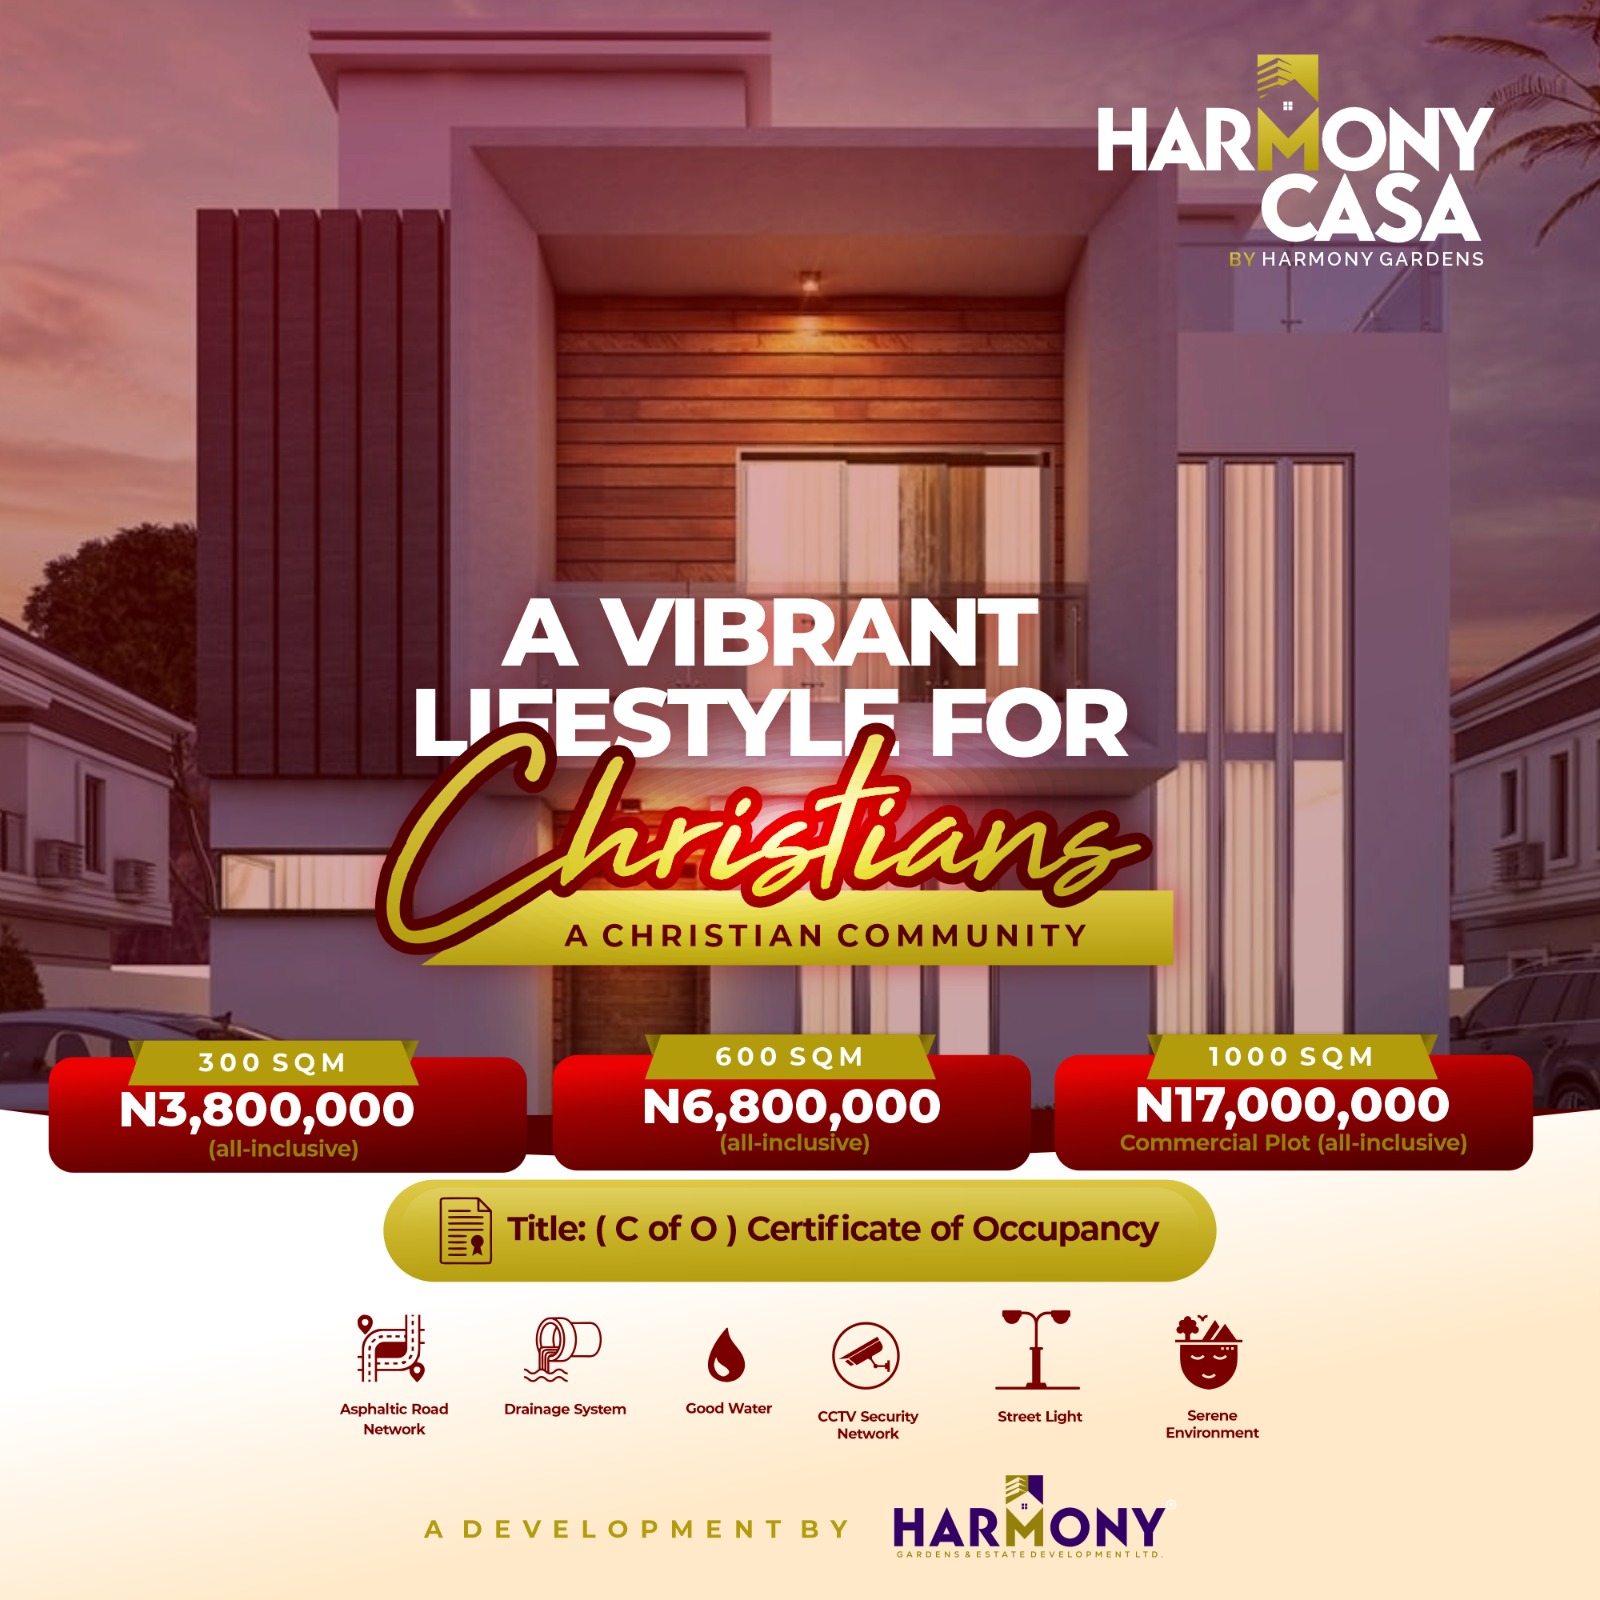 HARMONY CASA (Christian Community Estate), Elerangbe, Ibeju-Lekki, Lagos.